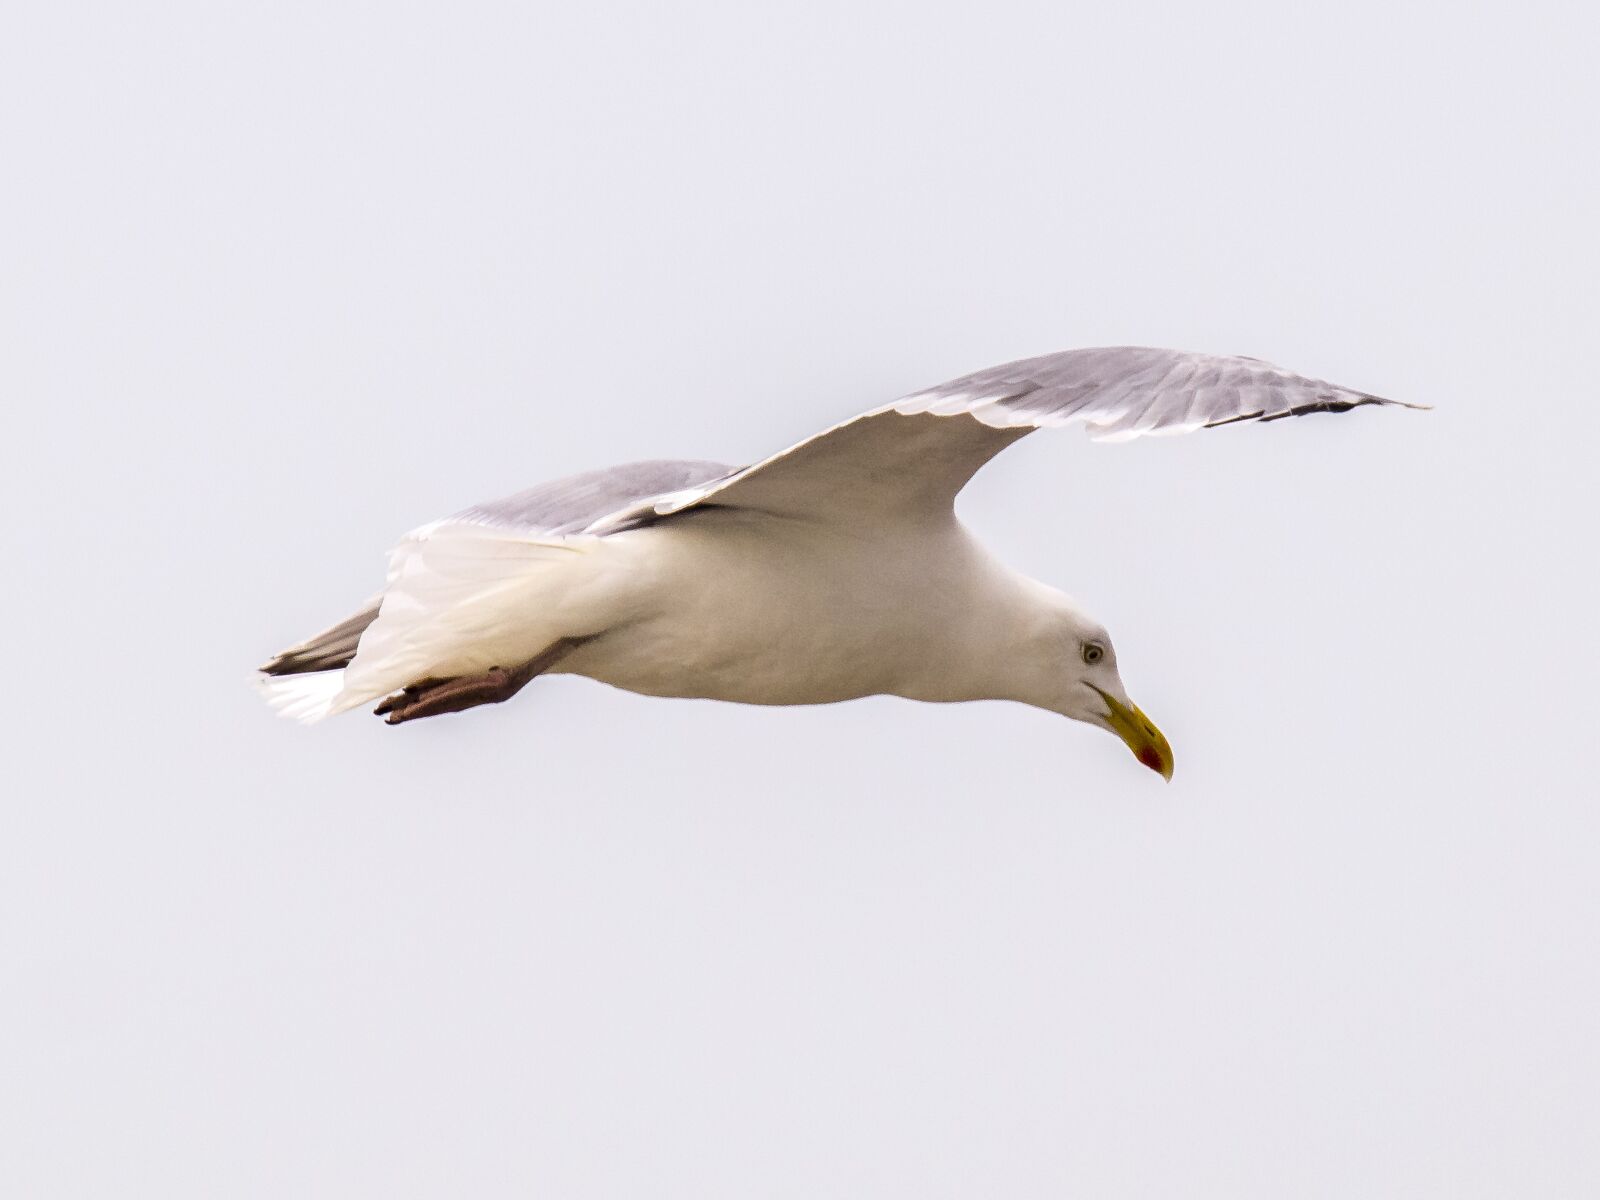 Olympus E-5 + SIGMA 50-500mm F4-6.3 DG HSM sample photo. Herring gull, seagull, bird photography